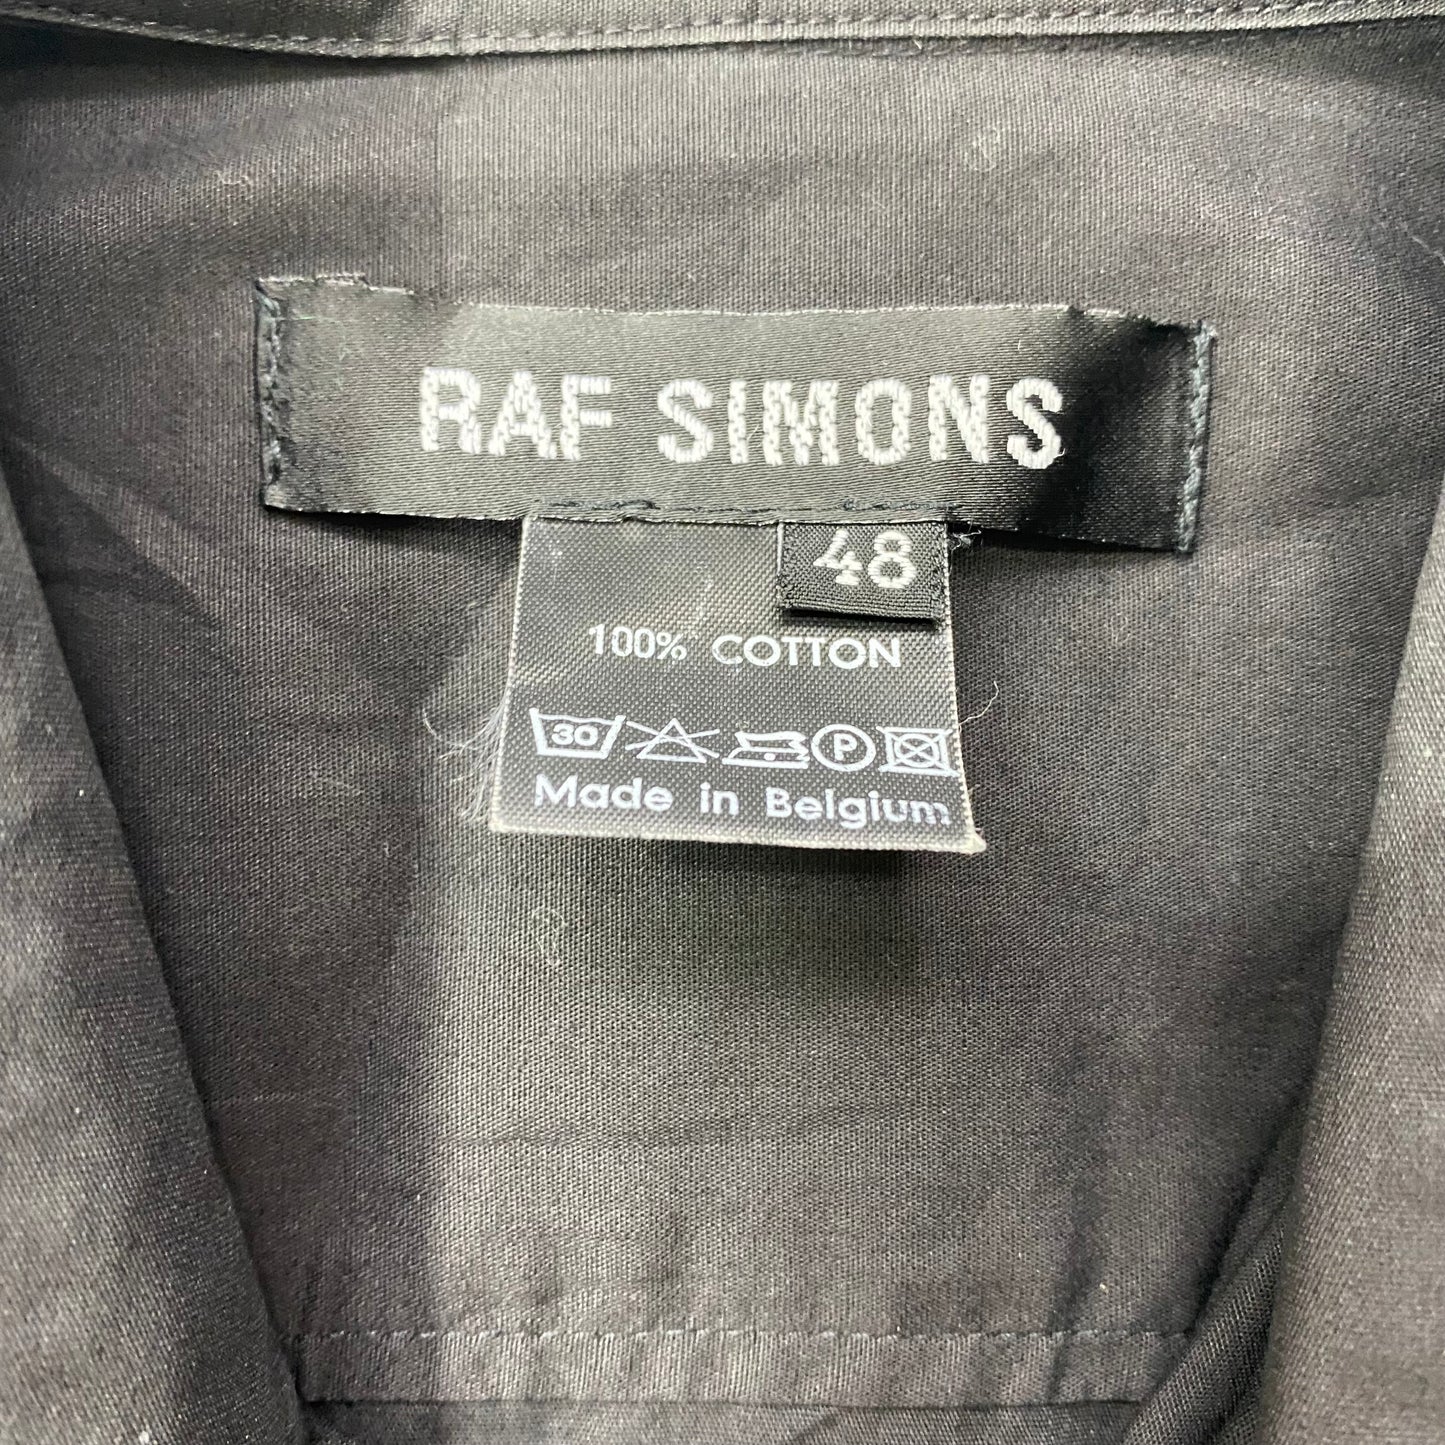 Raf Simons “R” Emblem Elongated Sleeves Button Up Size S/S99 Size Medium